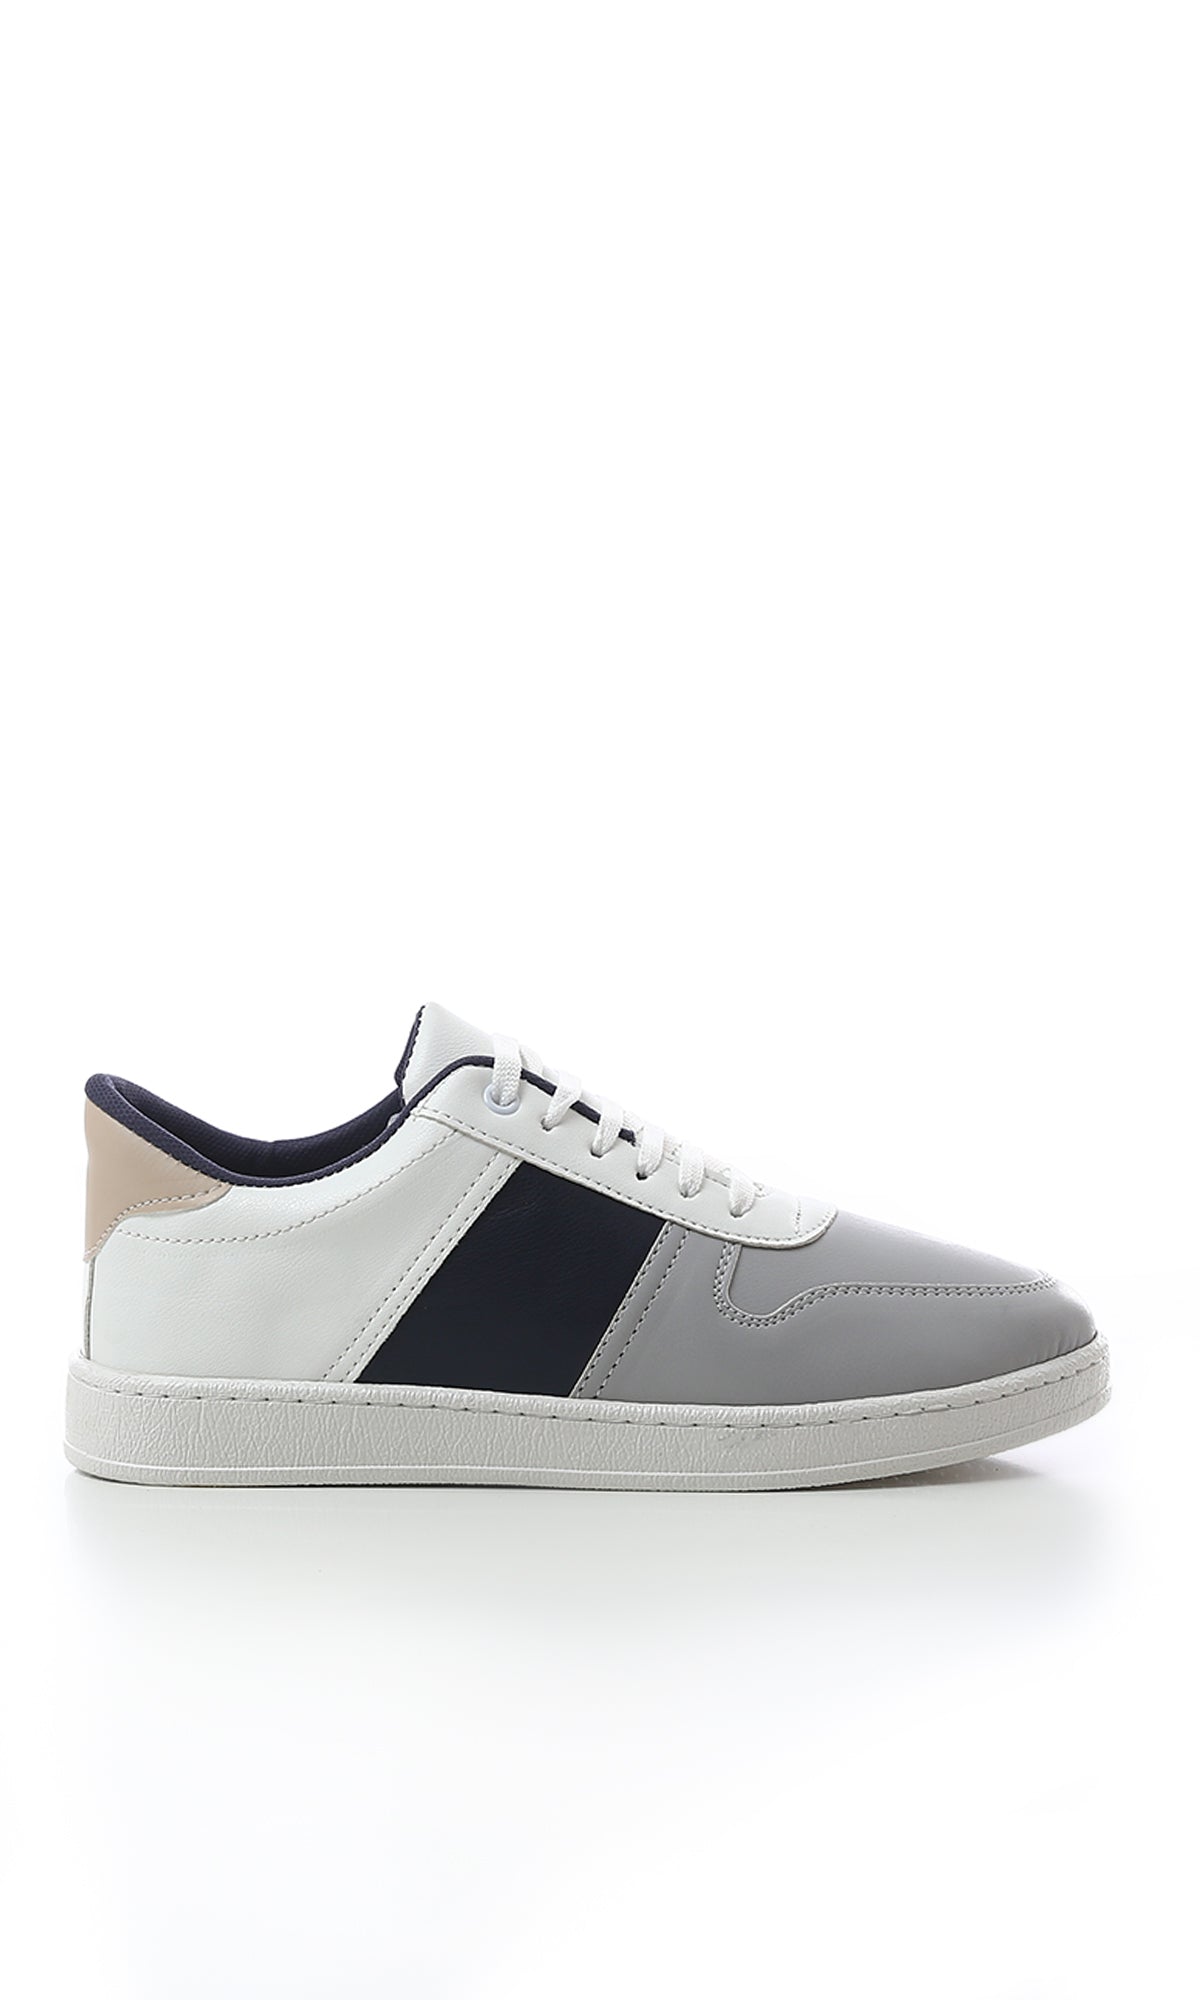 O179079 Tri-Tone Round Toecap Casual Shoes - Light Grey, White & Navy Blue